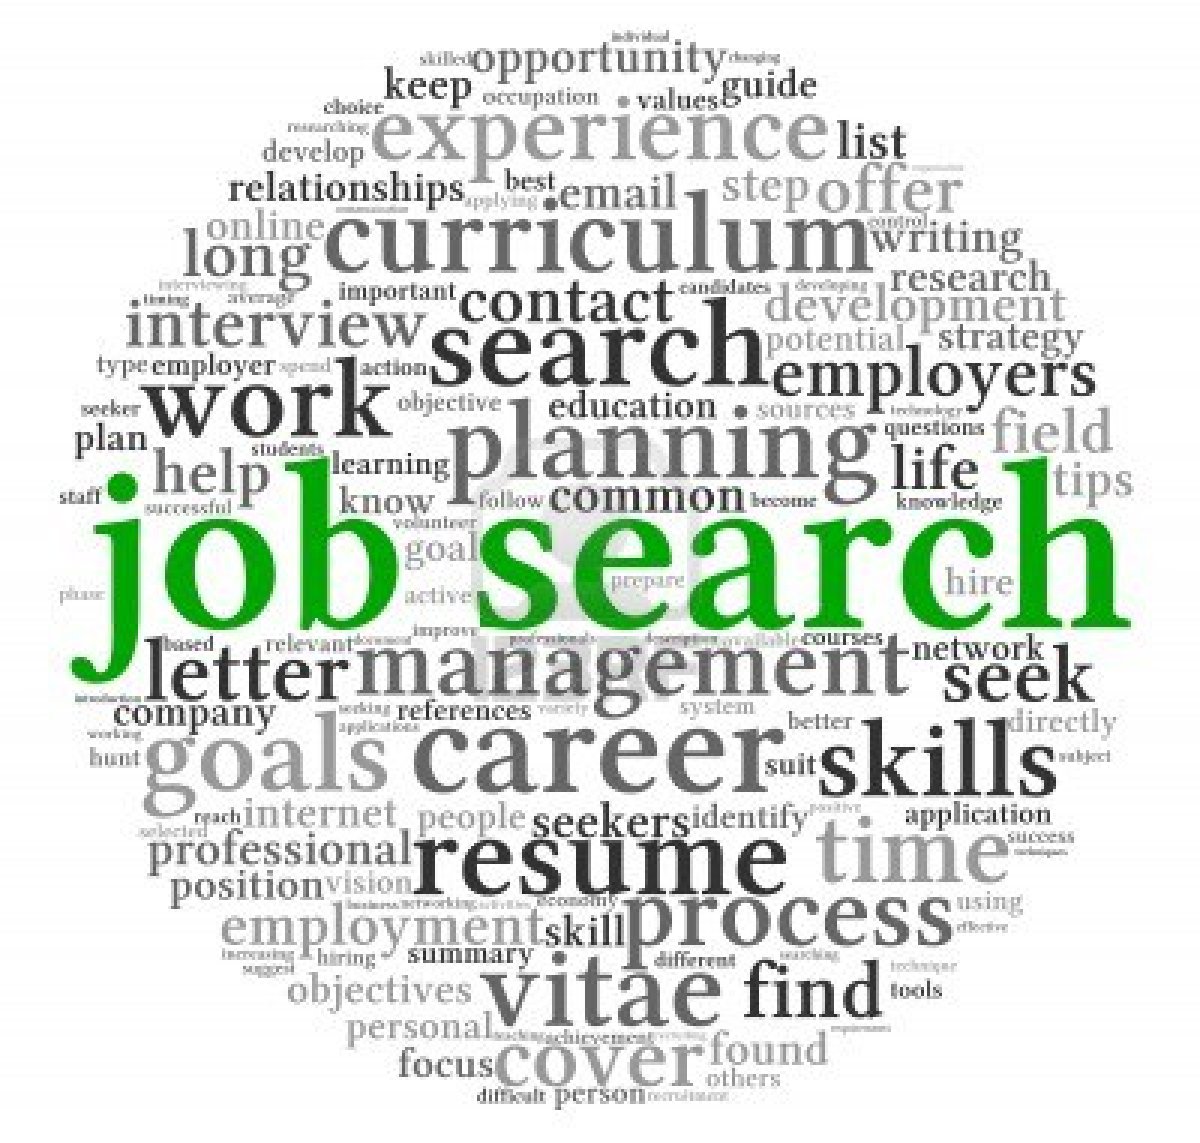 Job-search=-==